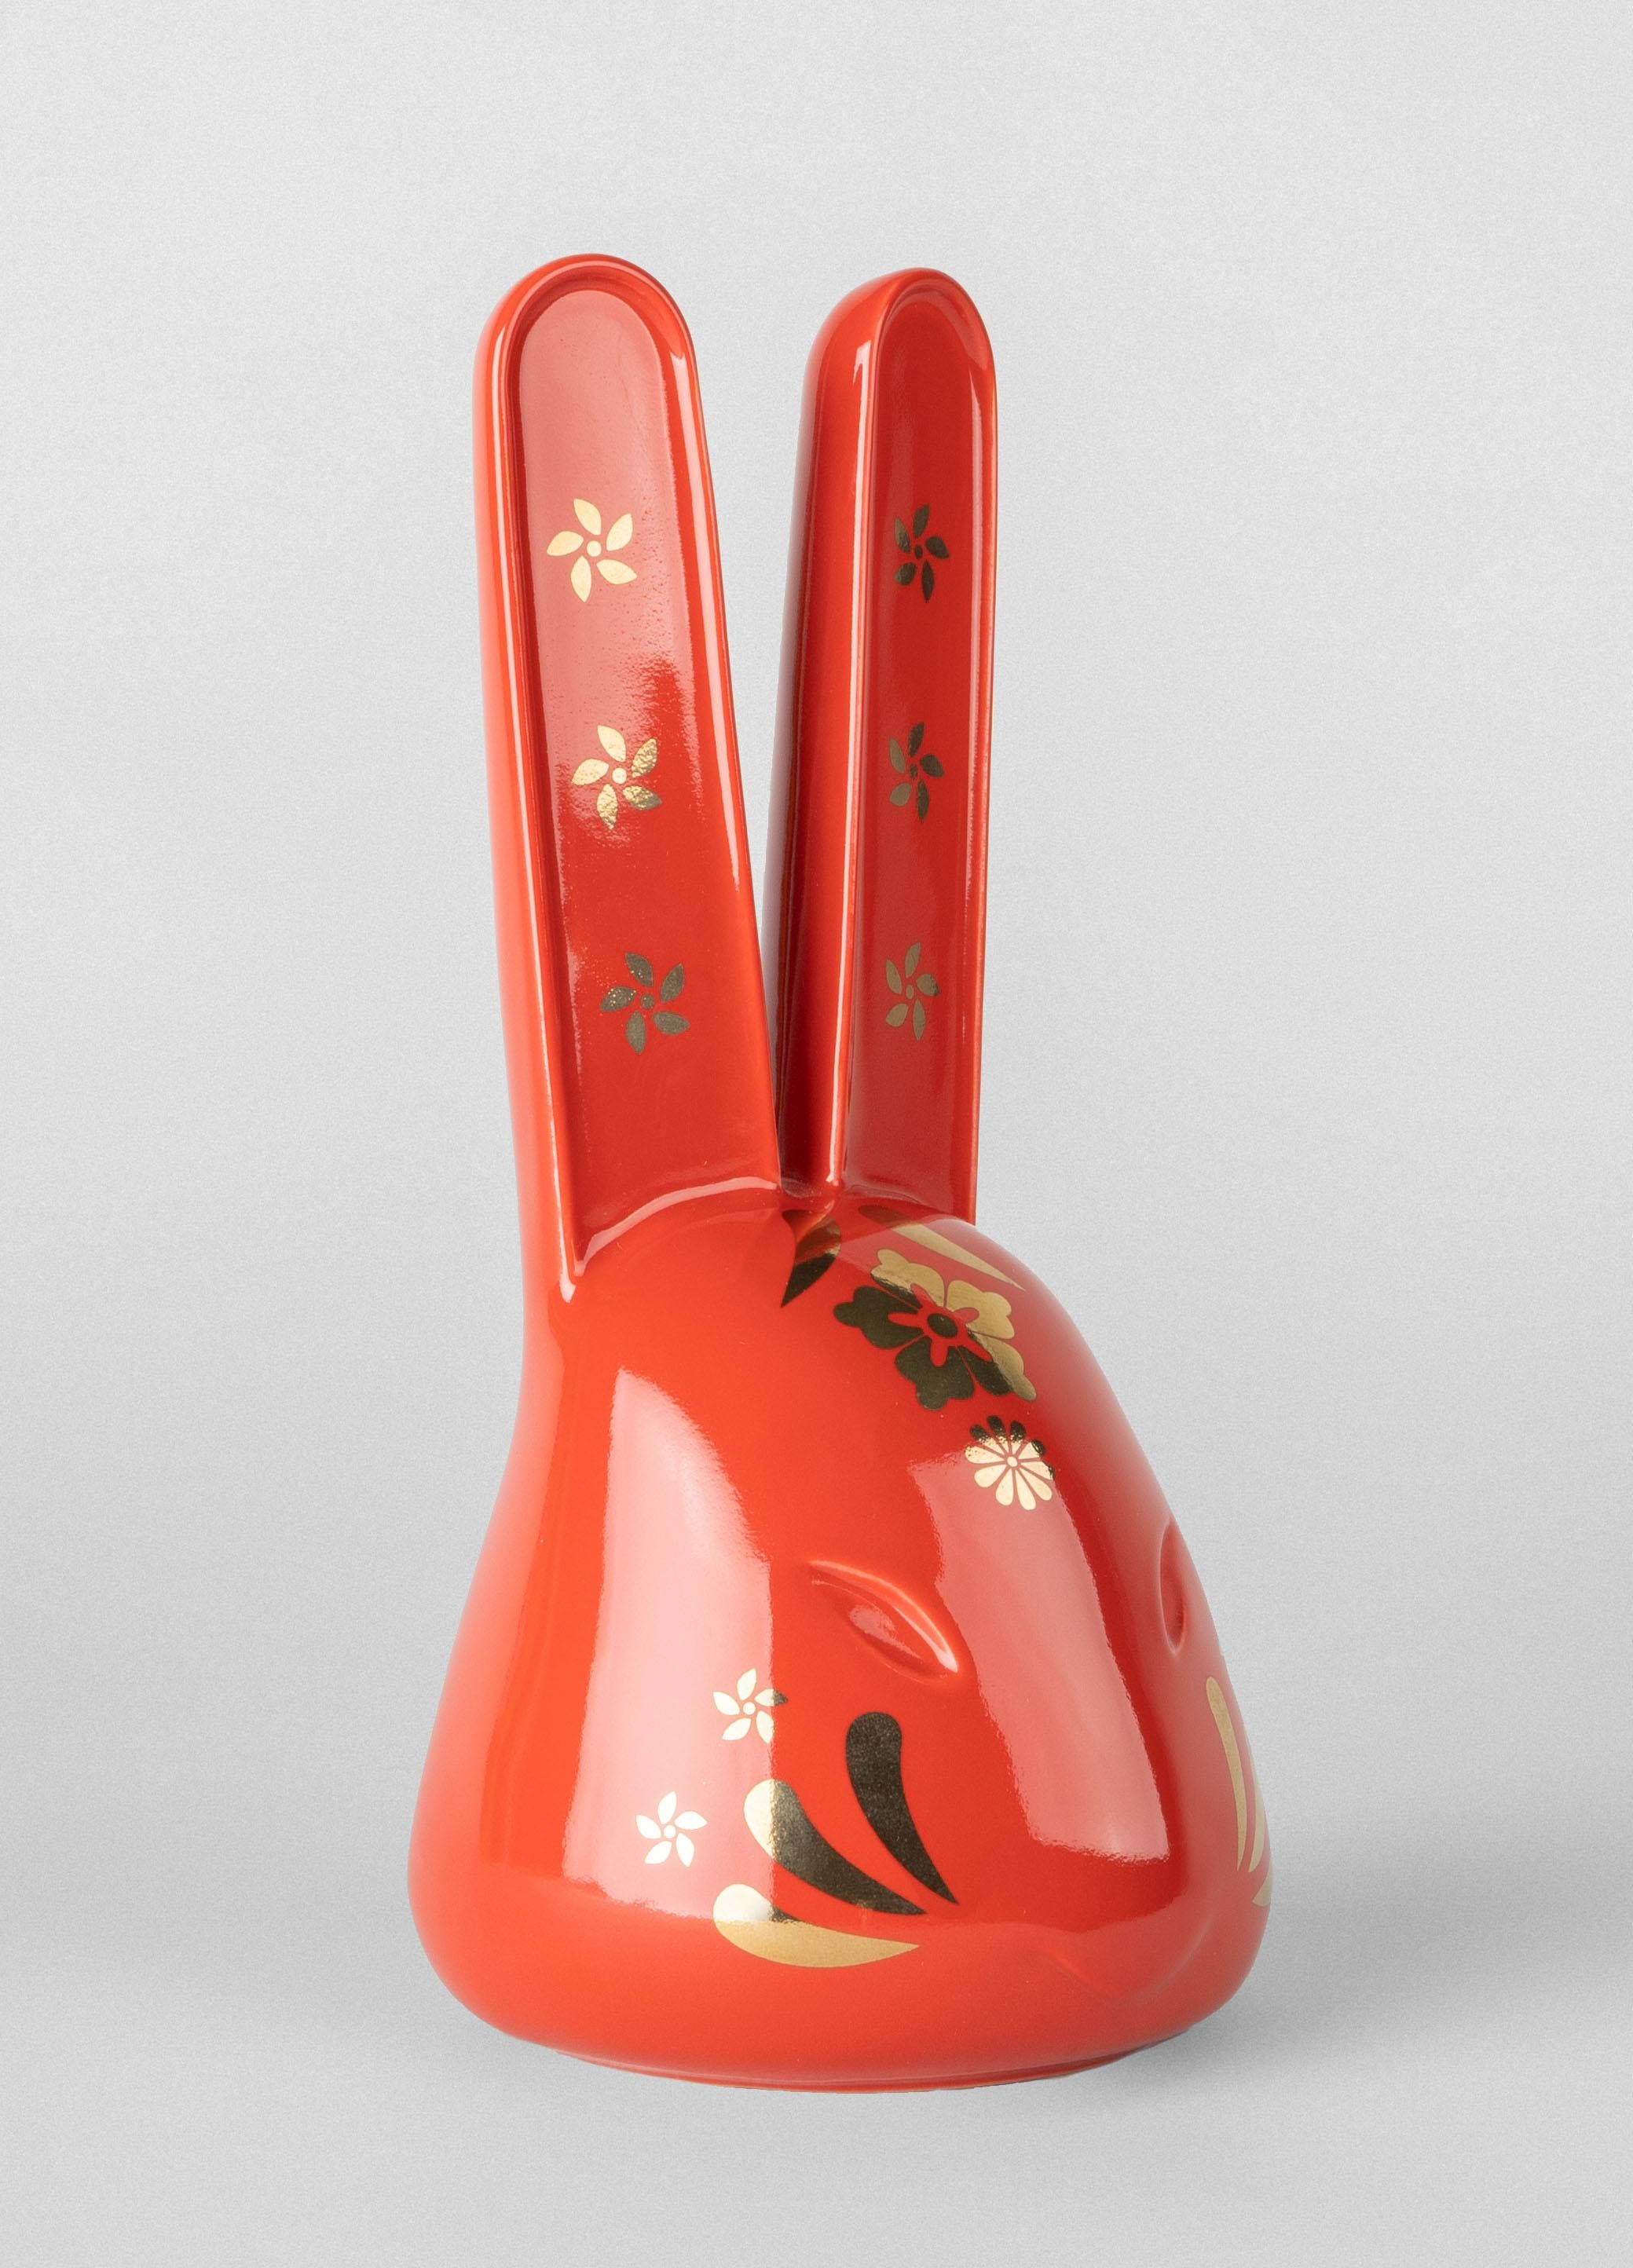 Spanish Rabbit, 'Red-Gold'